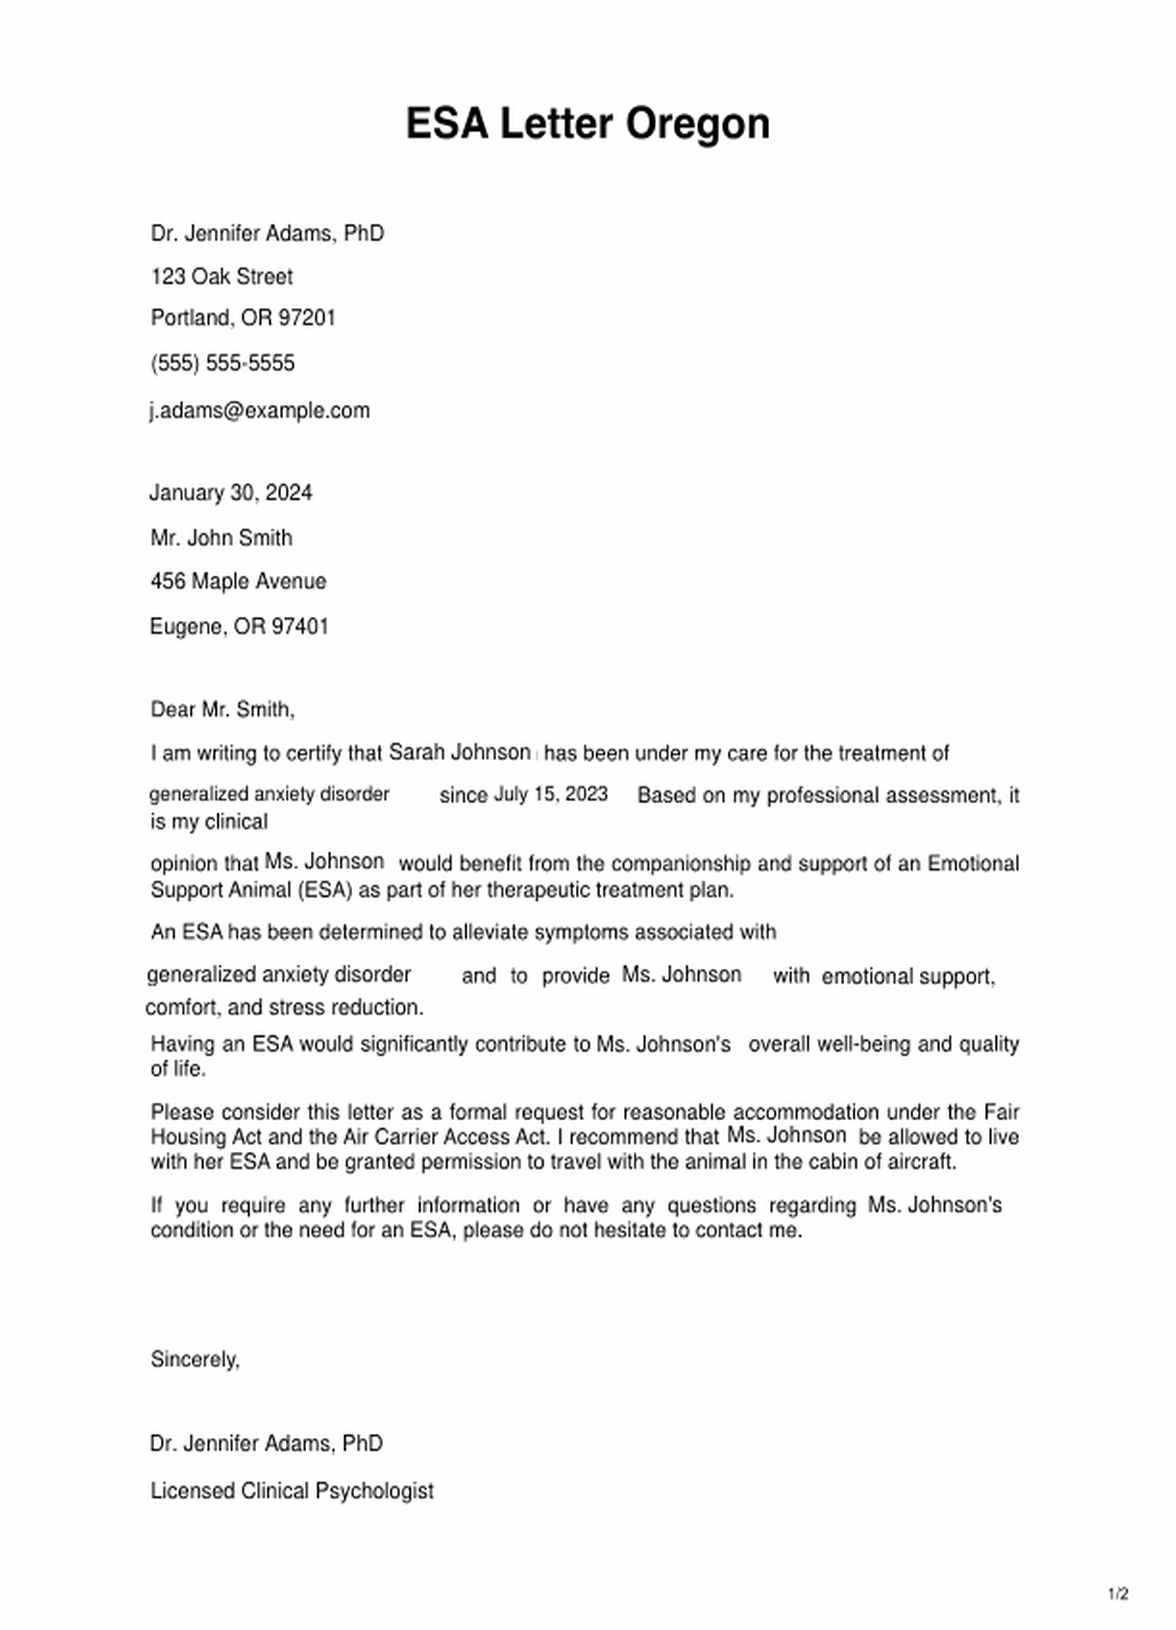 ESA Letter Oregon PDF Example